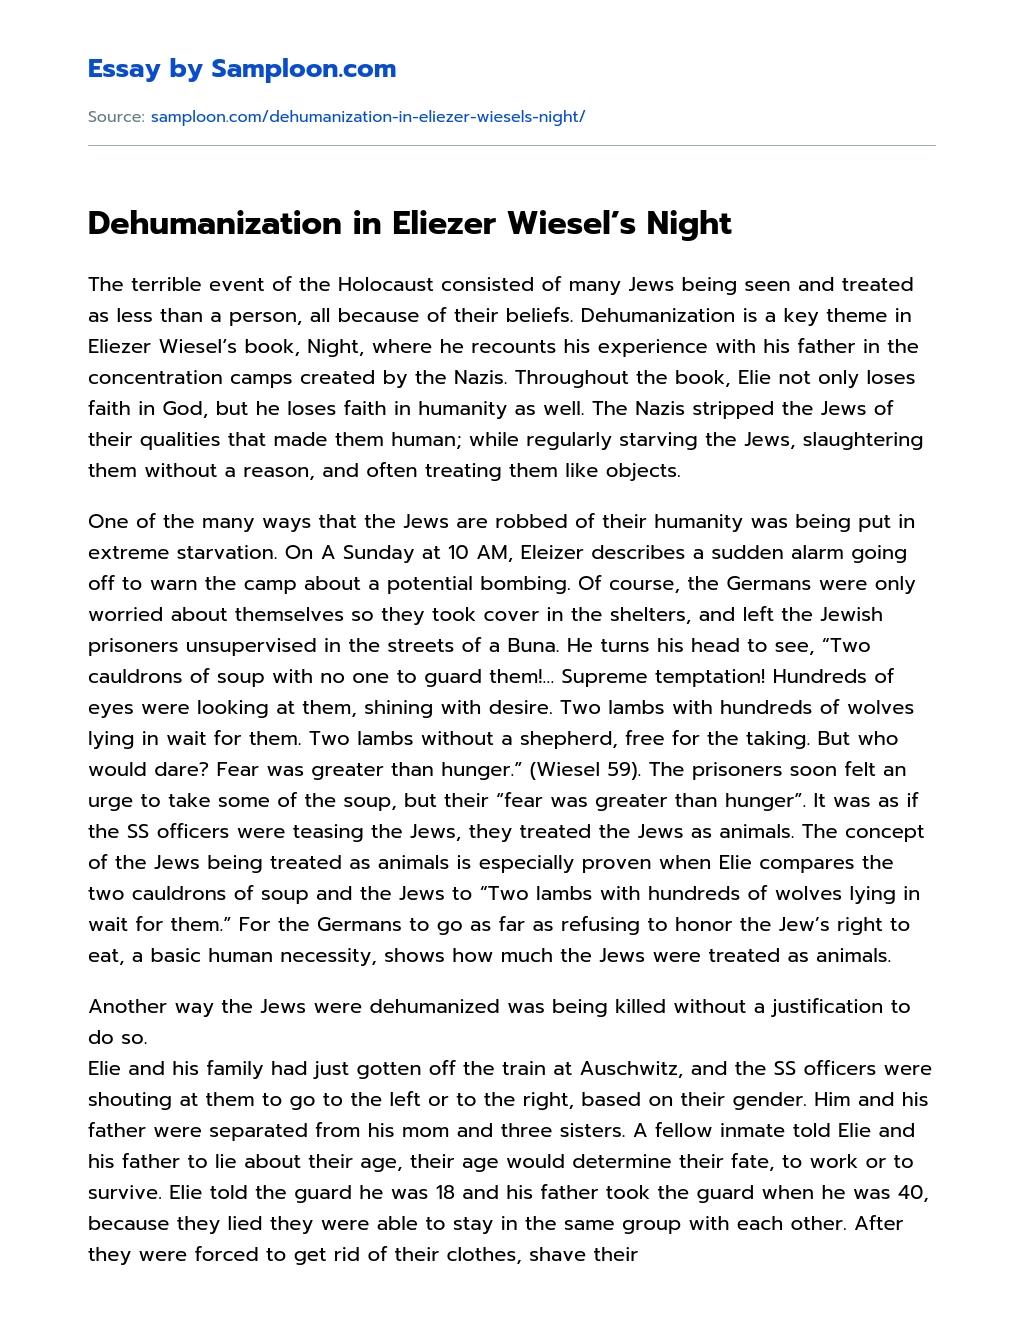 Dehumanization in Eliezer Wiesel’s Night essay